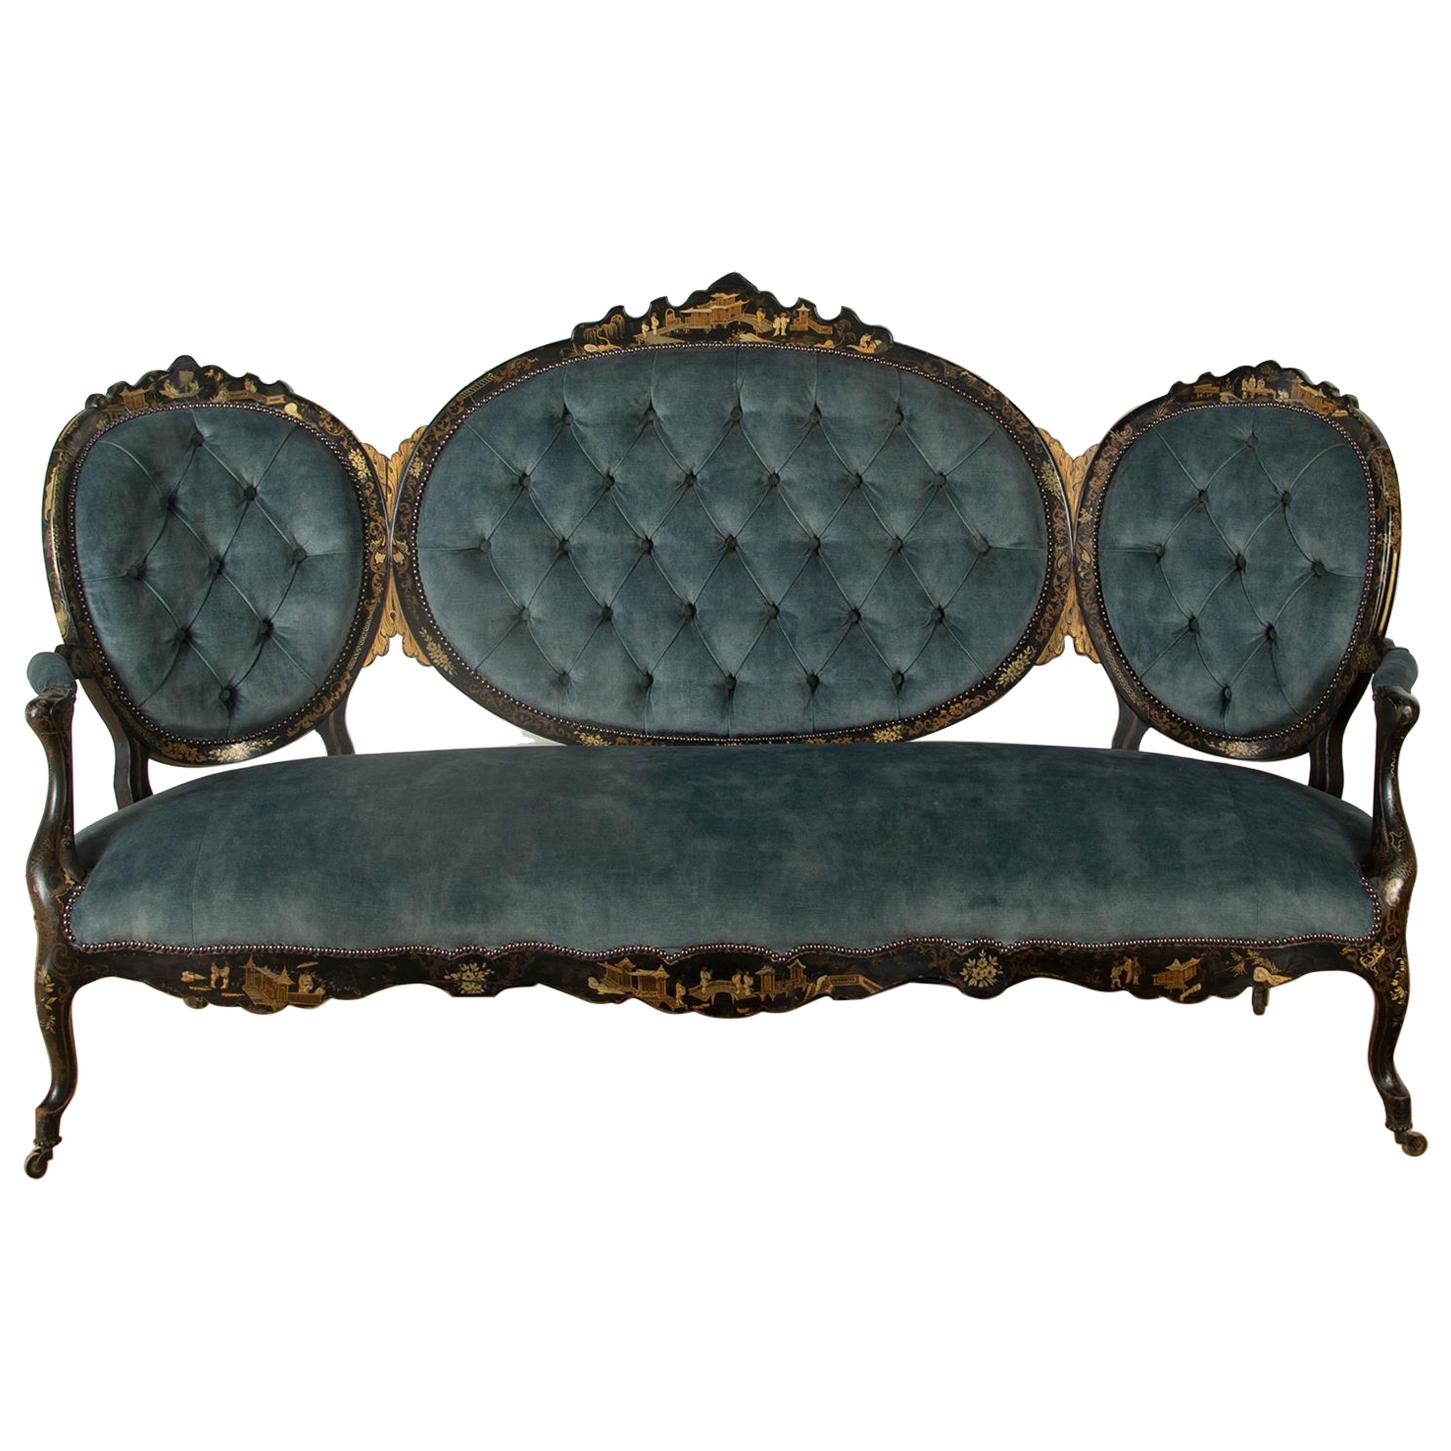 19th Century French Chinoiserie Sofa